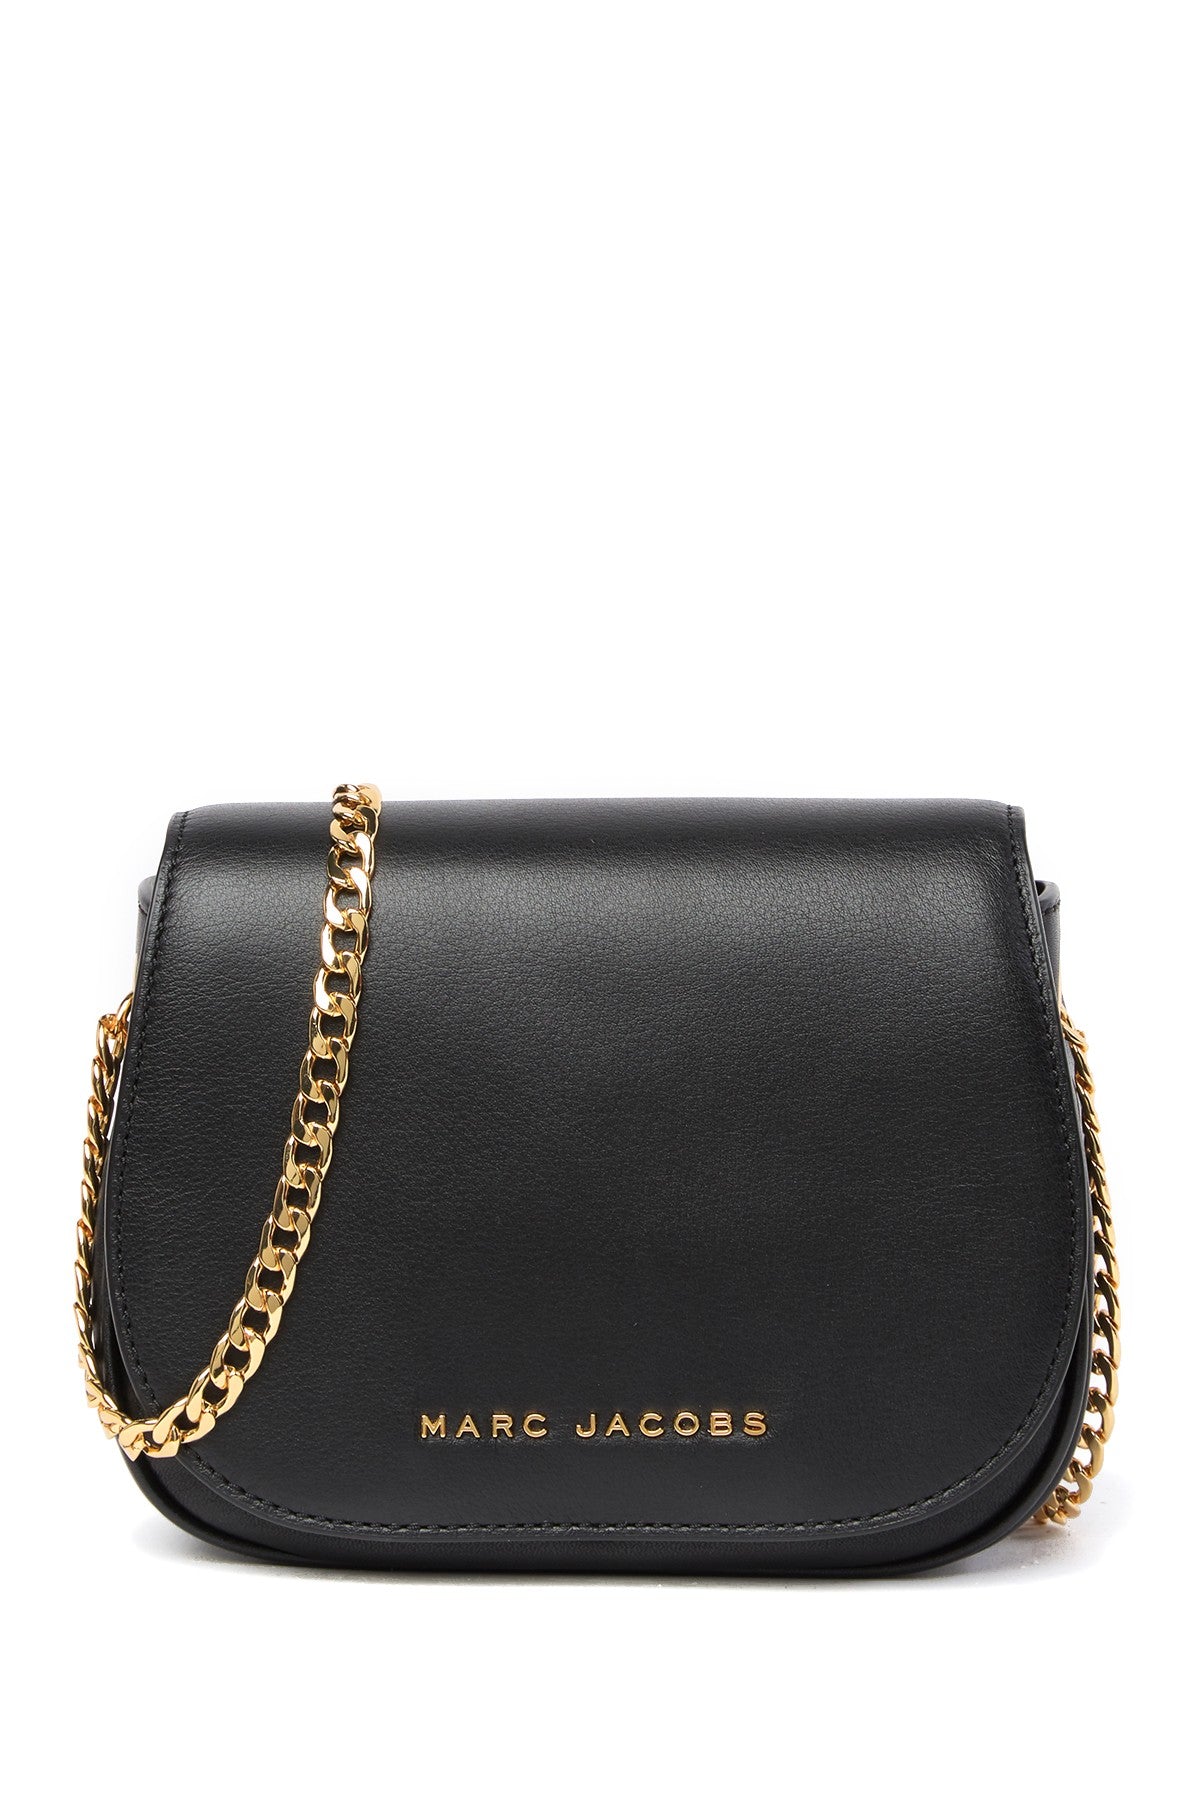 Marc Jacobs Beige Leather Empire City Saddle Crossbody Bag Marc